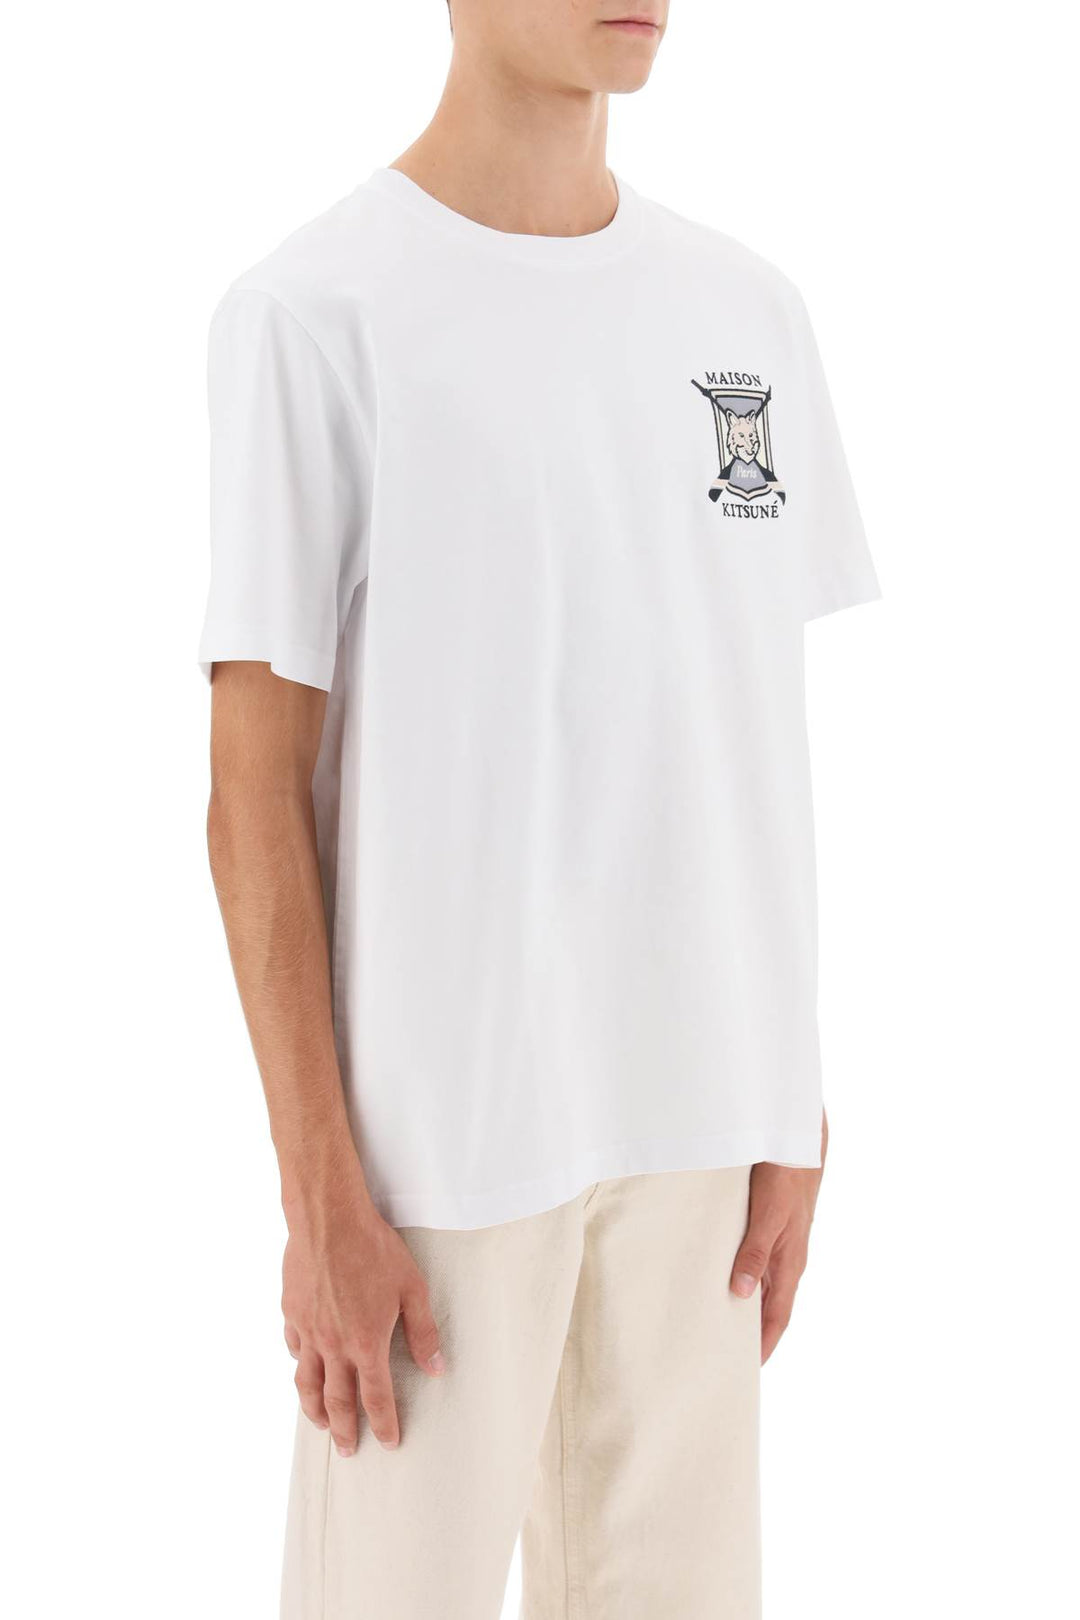 T Shirt Con Ricamo College Fox - Maison Kitsune - Uomo